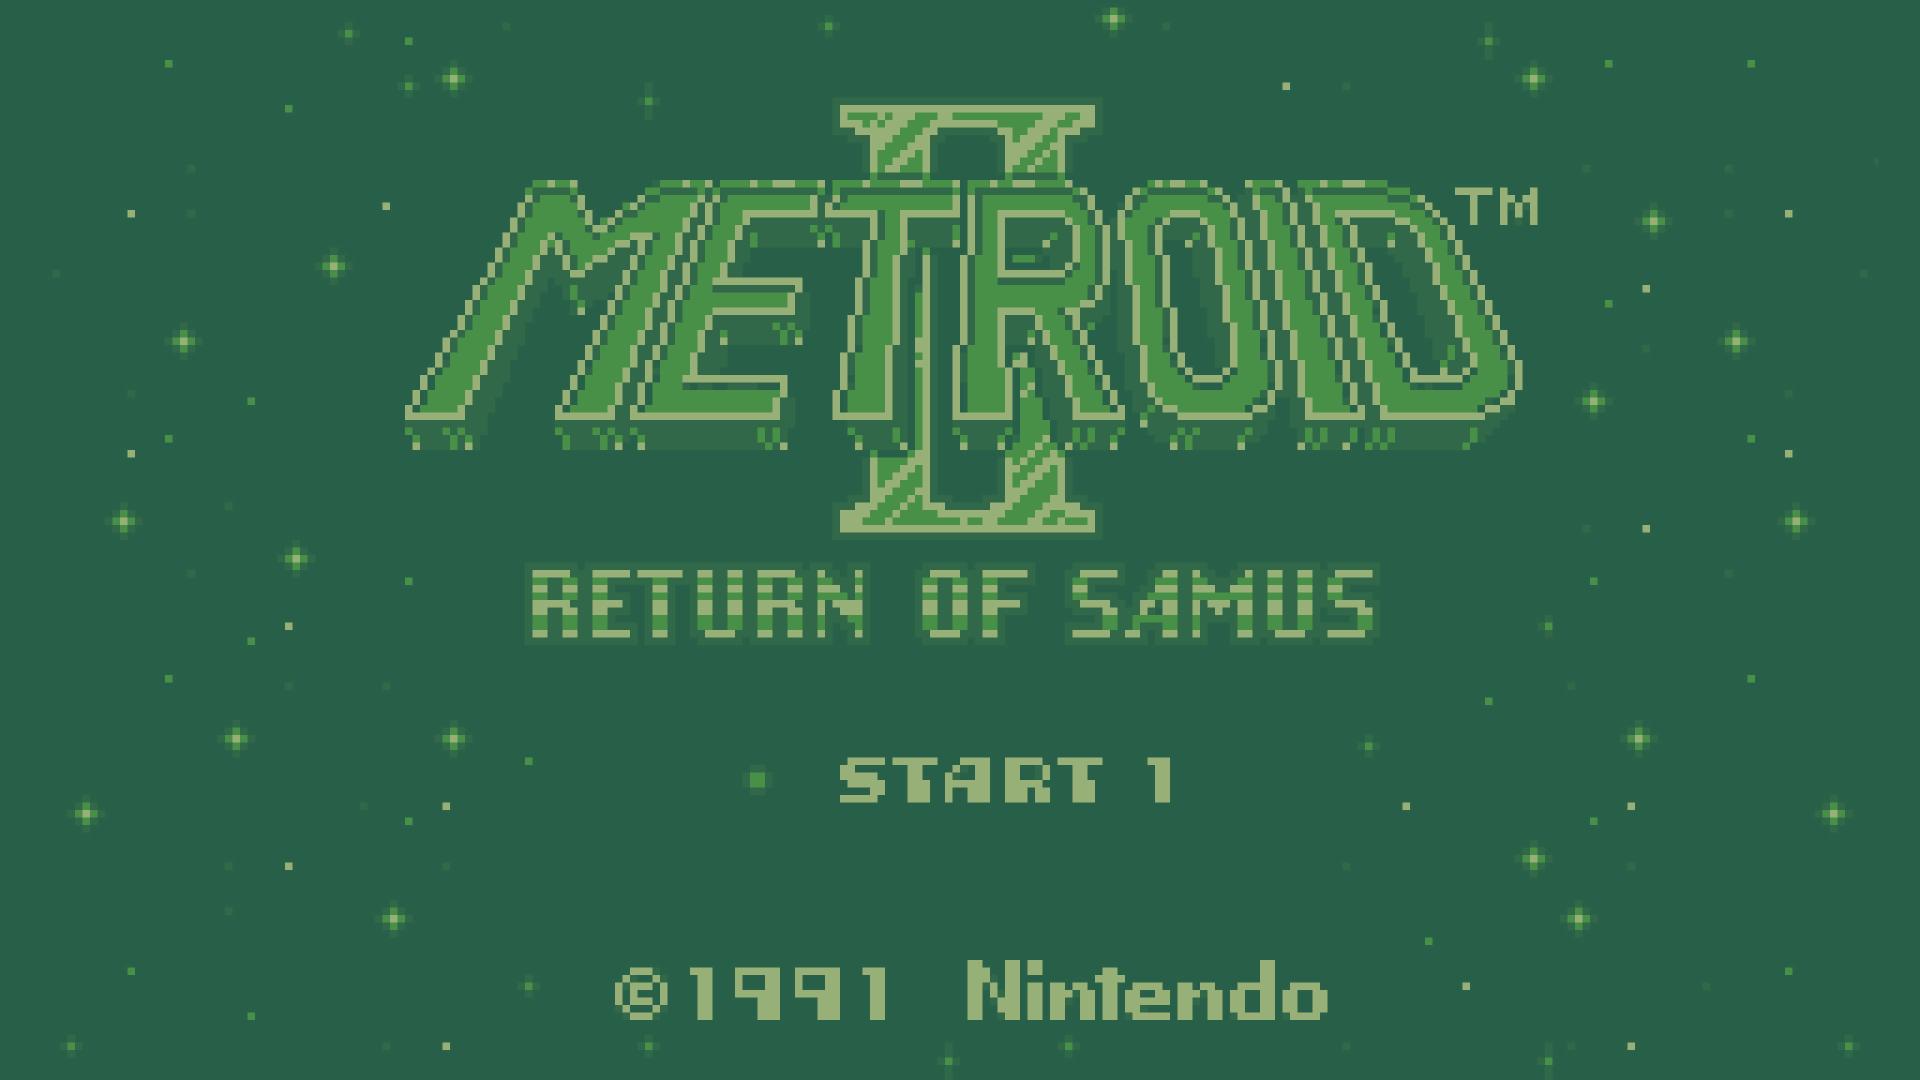 Metroid II Return Of Samus at 1024 x 768 size wallpapers HD quality